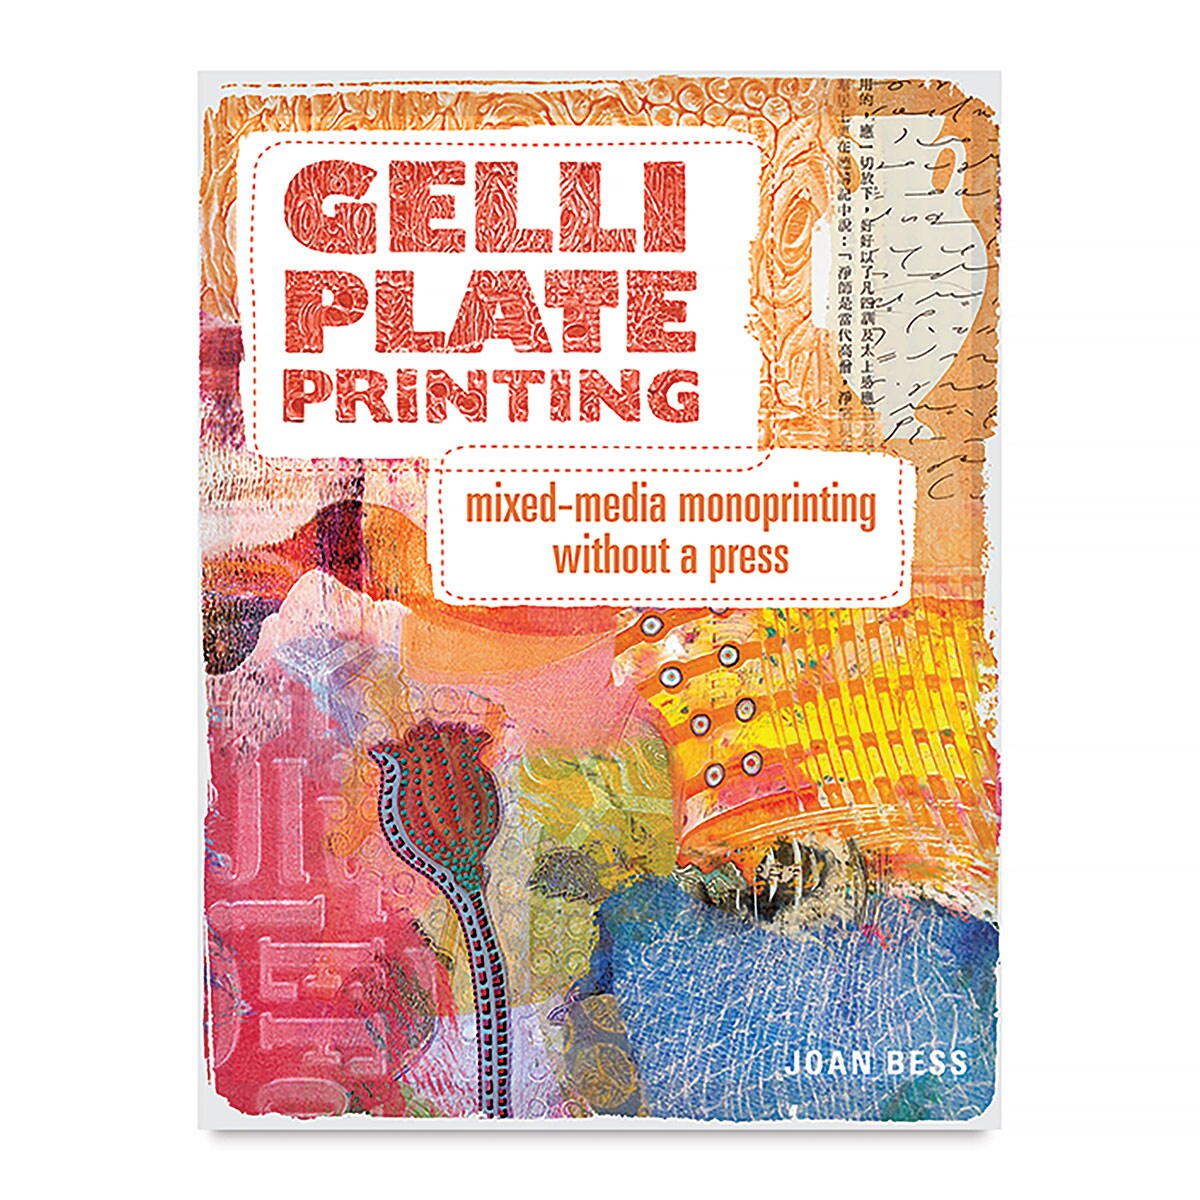 Gelli Plate Printing - Paperback